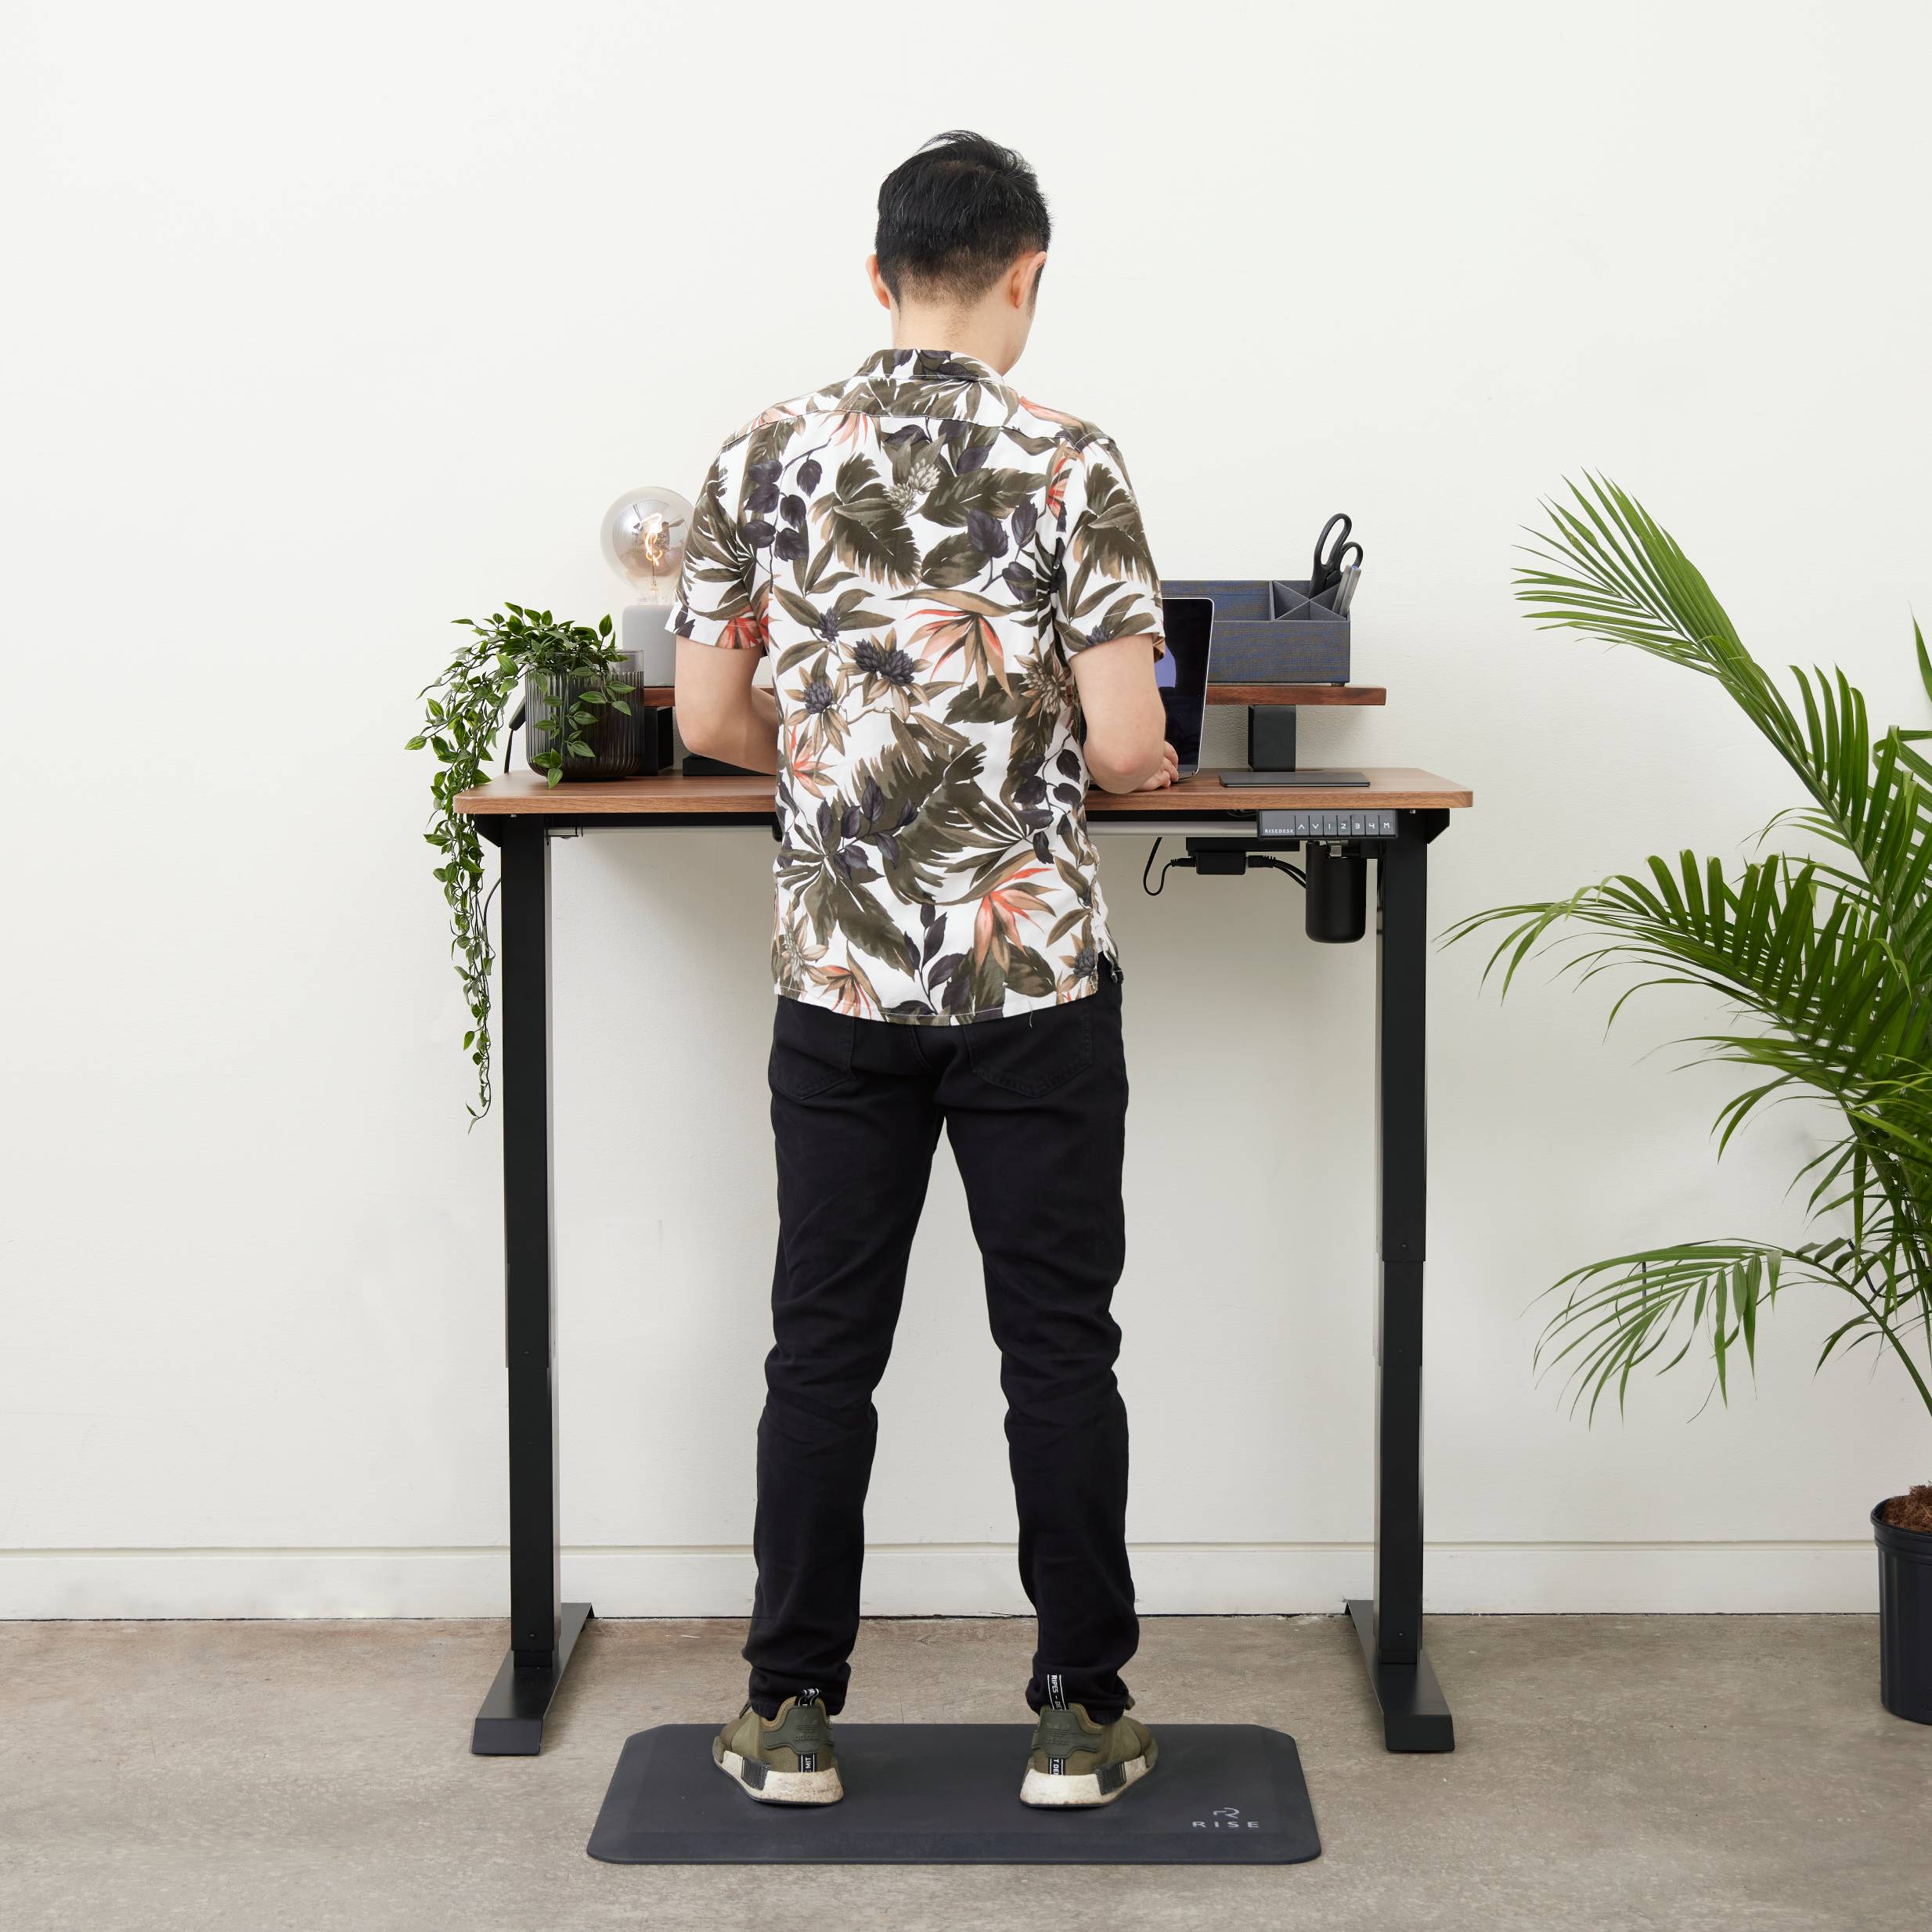 Walnut Standing Desk